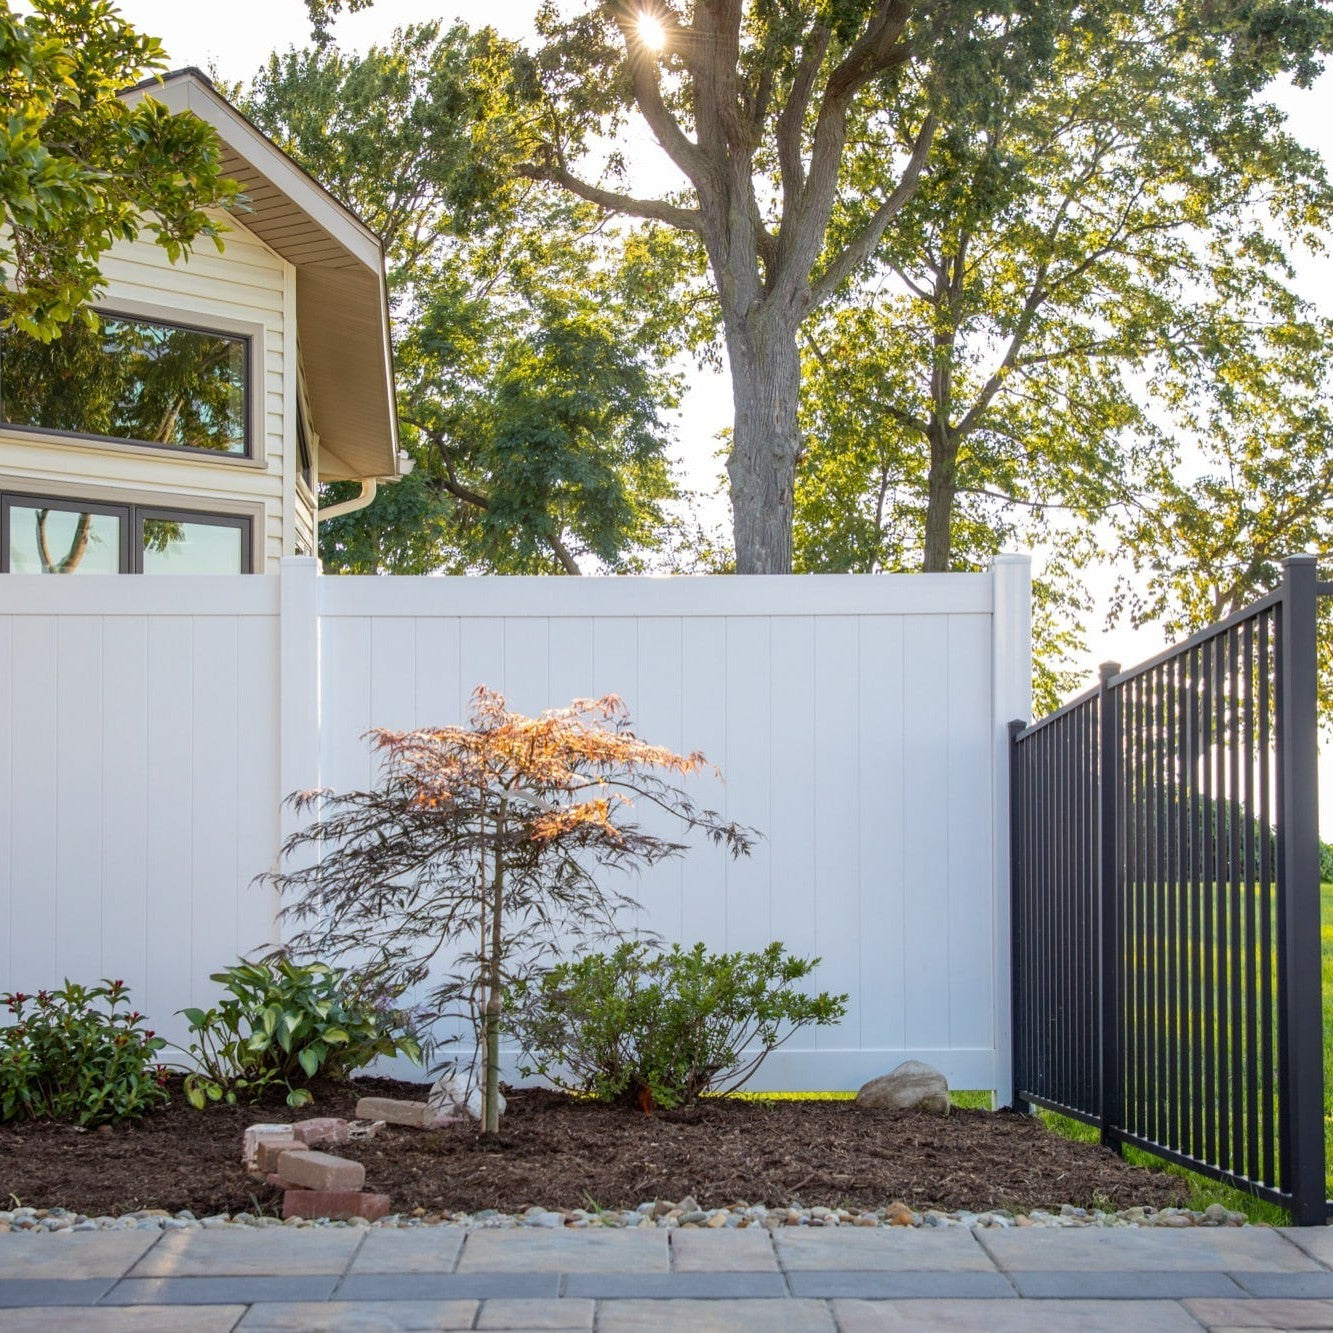 Bedrock Haven Series - Fence Panel - 4' x 6'-Aluminum Fence Panels-ActiveYards-Black-FenceCenter